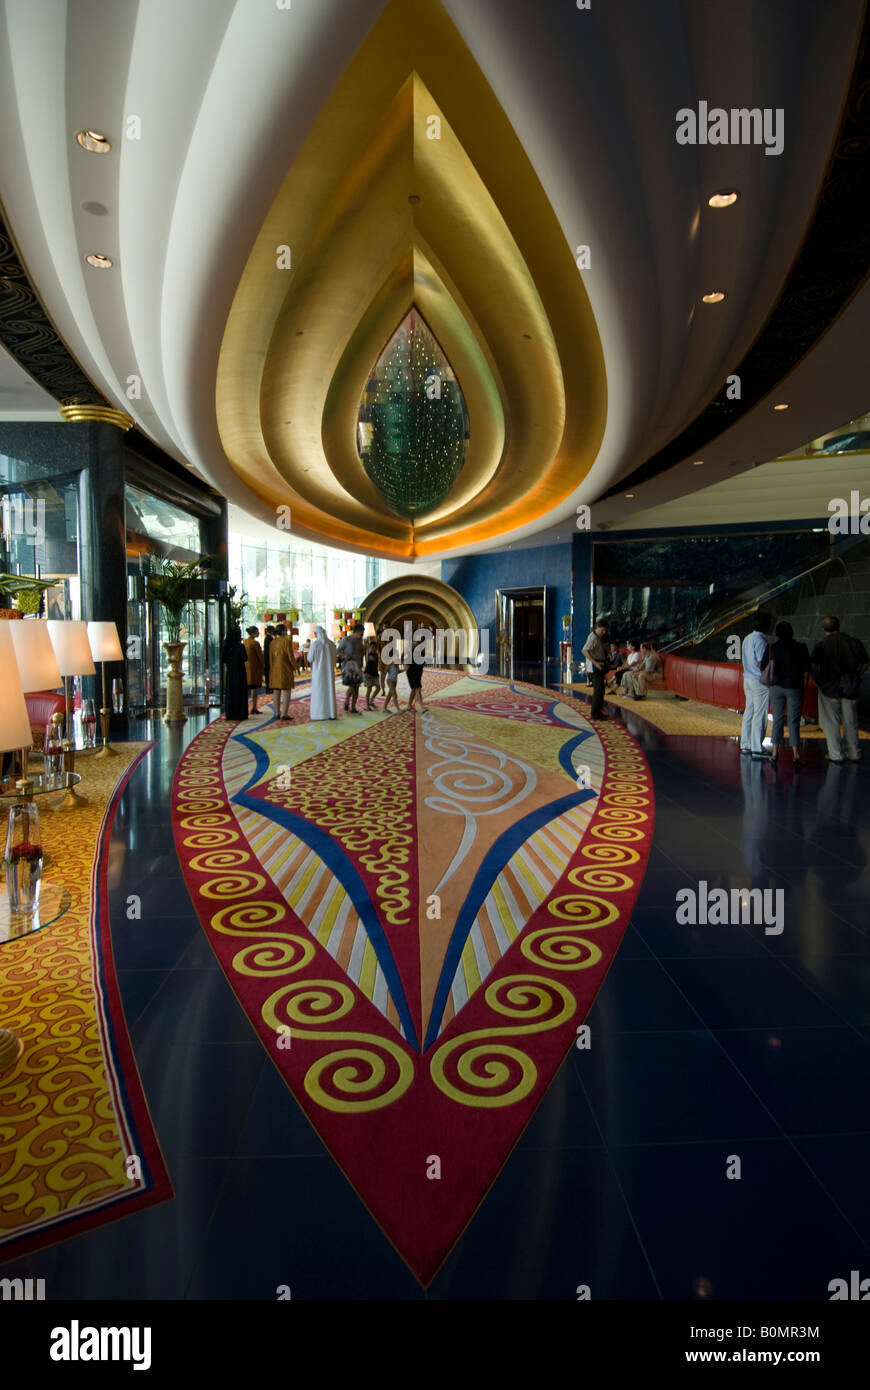 The lobby of the Burj al arab hotel L entree de l hotel Burj al arab Stock Photo